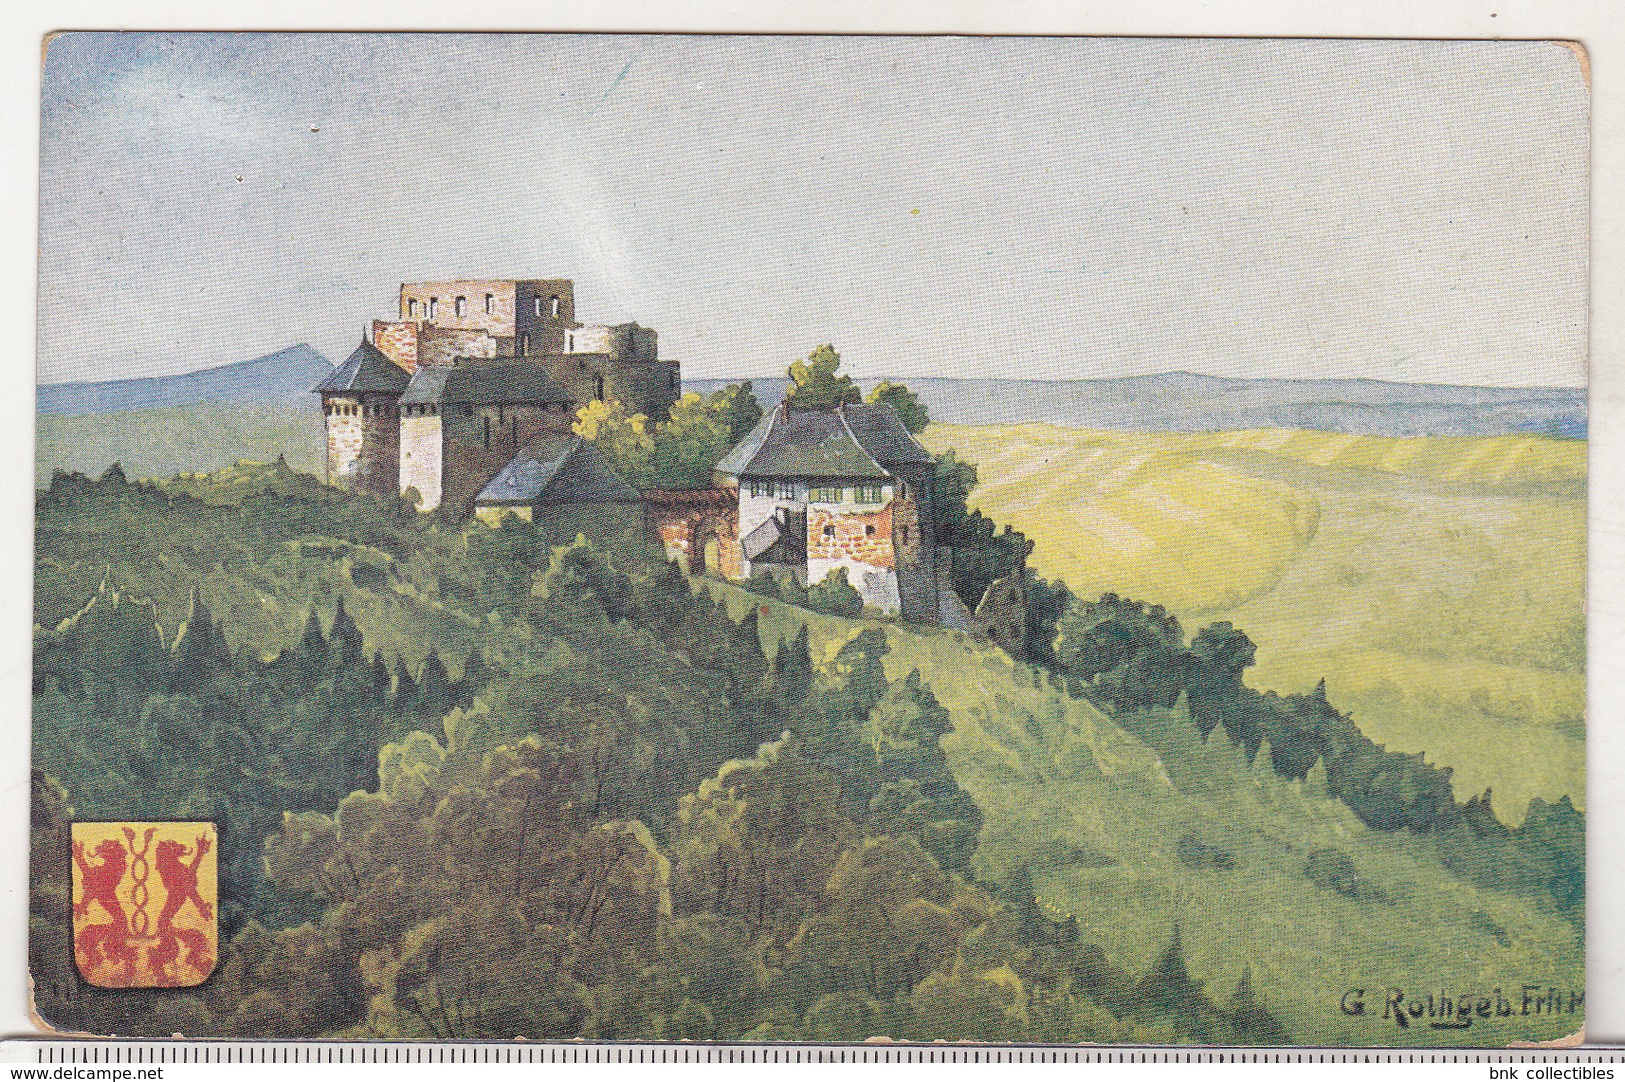 Germany Old Uncirculated Postcard - Gg. Rothgeb Postcards - Swabian Jura Serie No 1 - Hohenrechberg Castle - Schwaebisch Gmünd